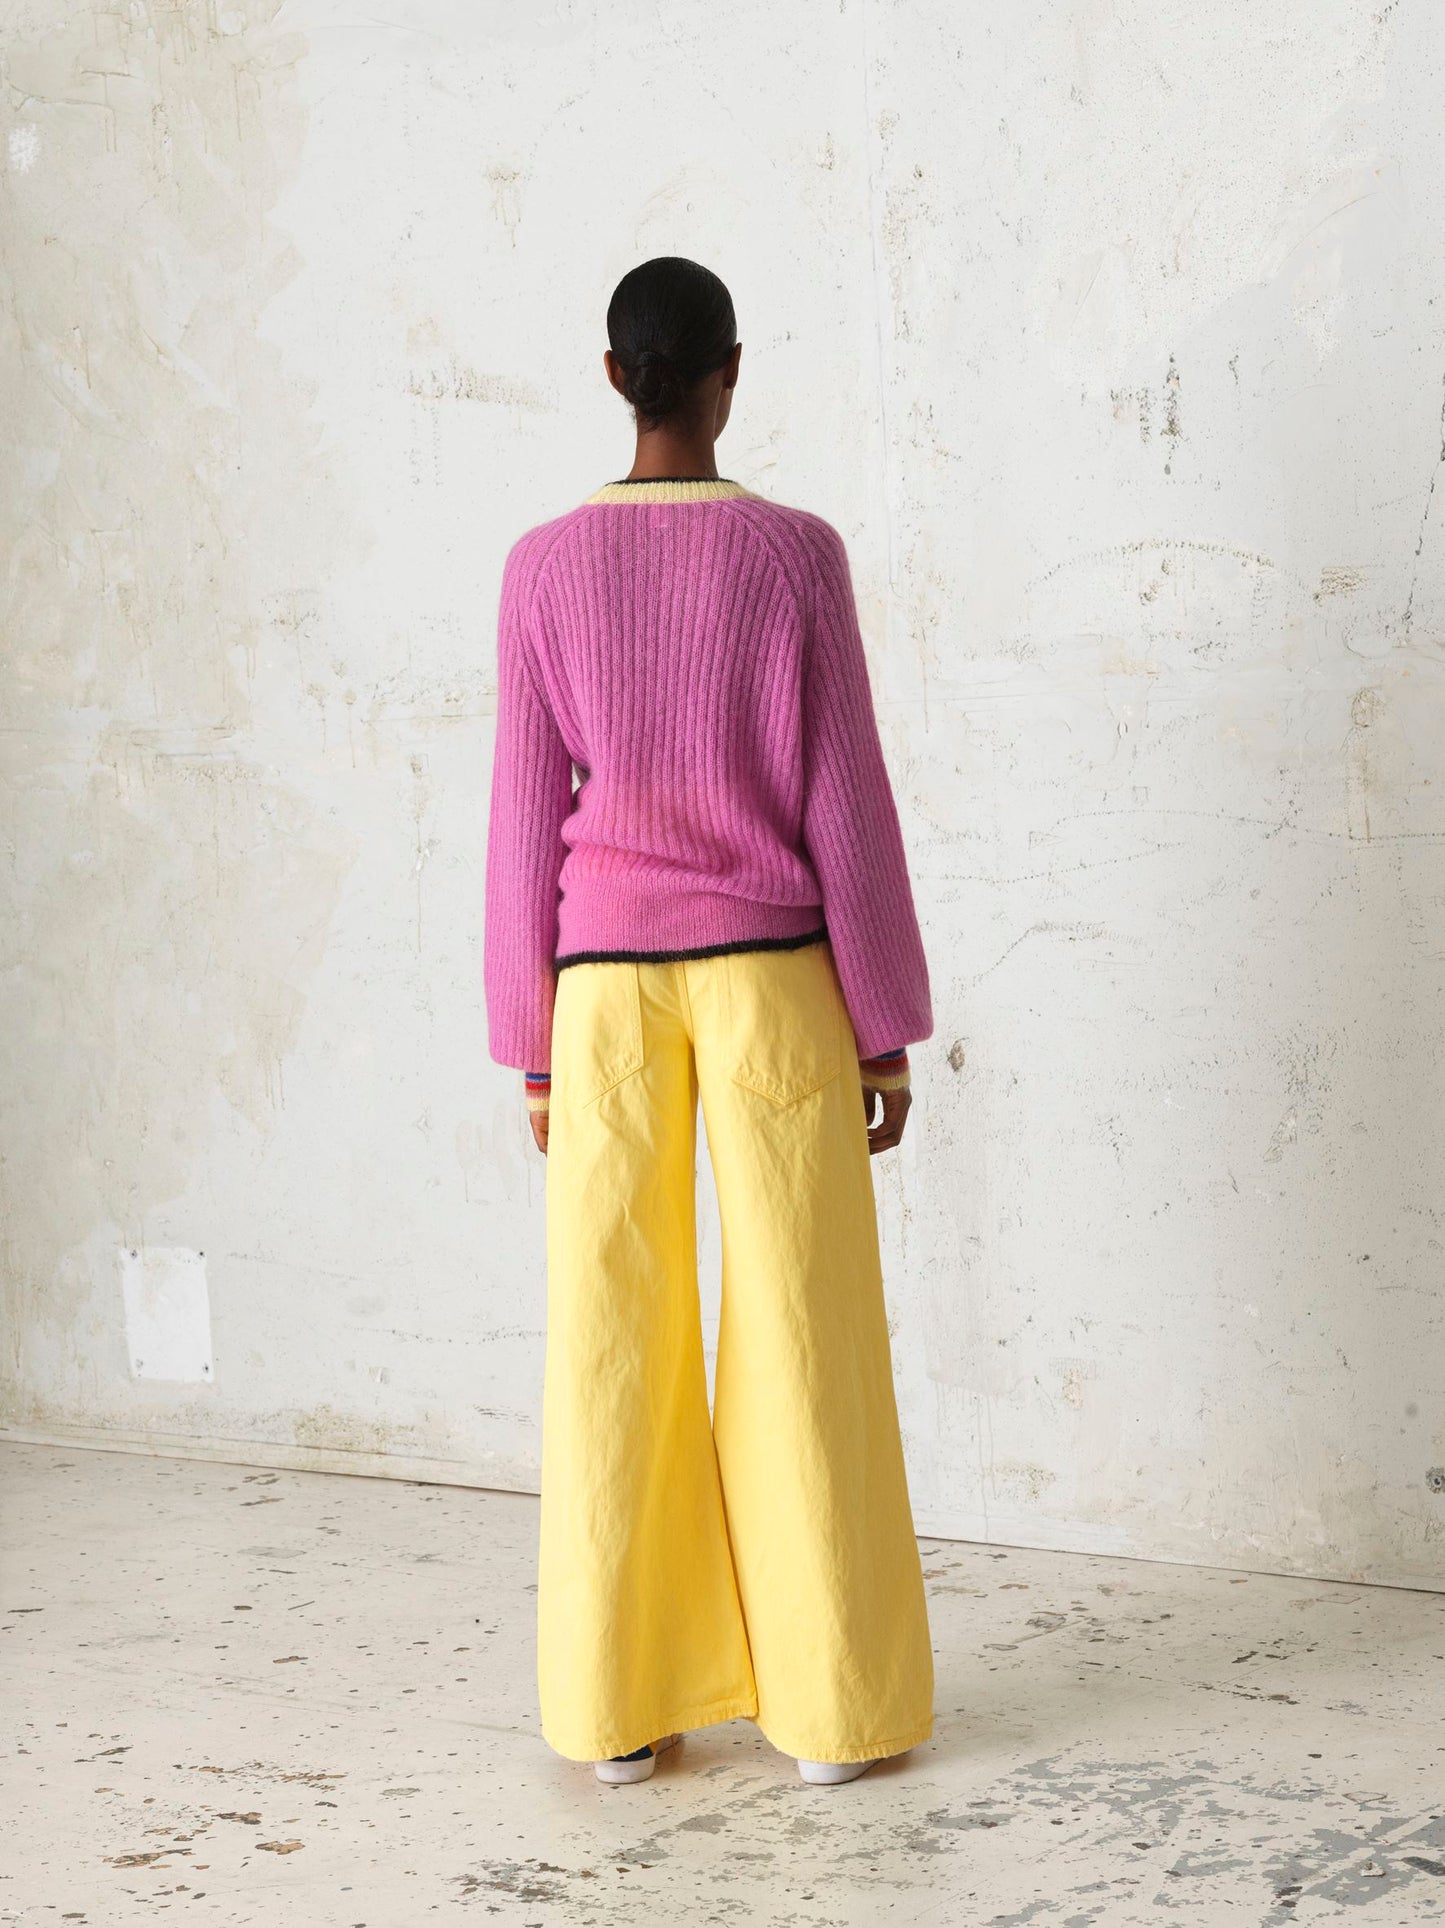 Solid Grace Sweater Clothing   - Becksöndergaard